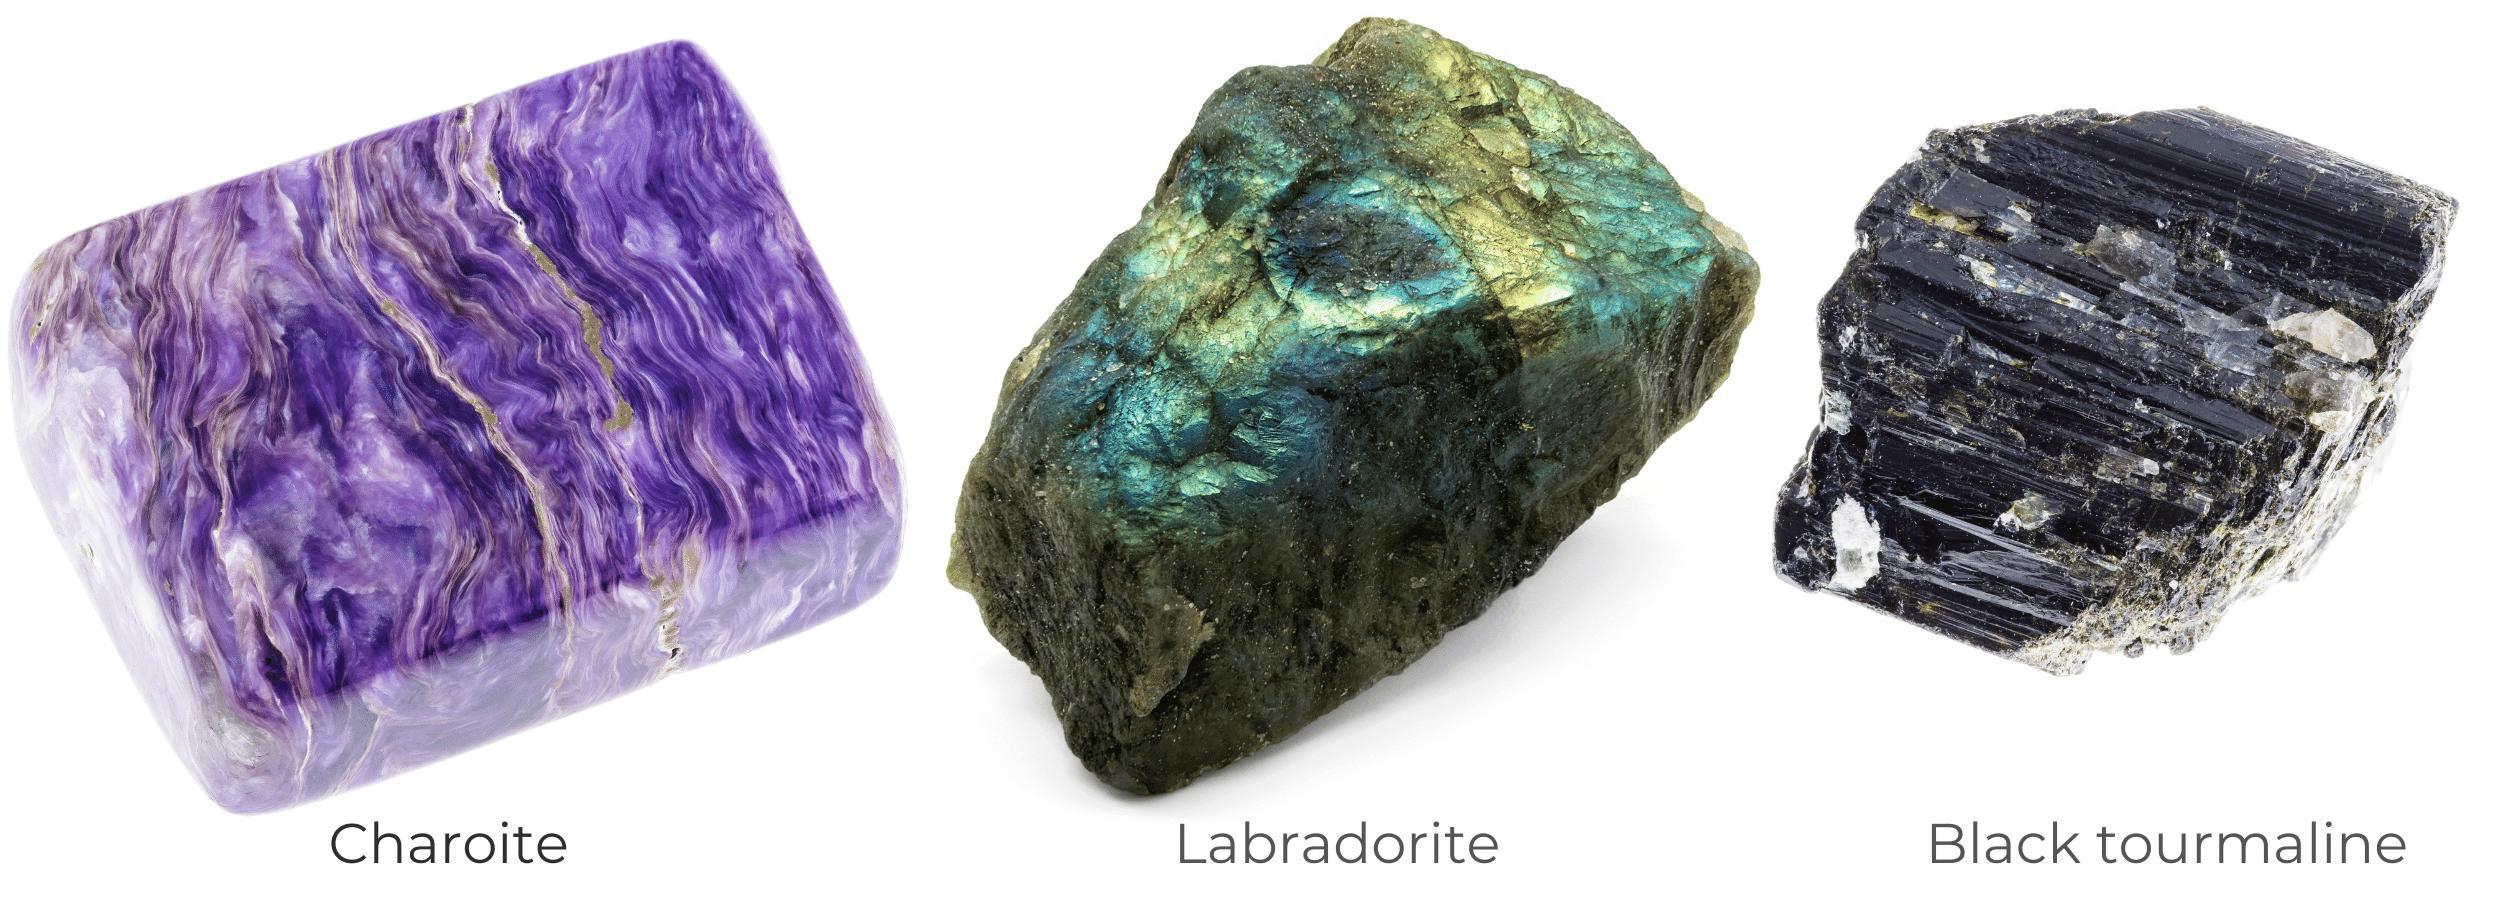 Charoite, labradorite and black tourmaline healing crystals